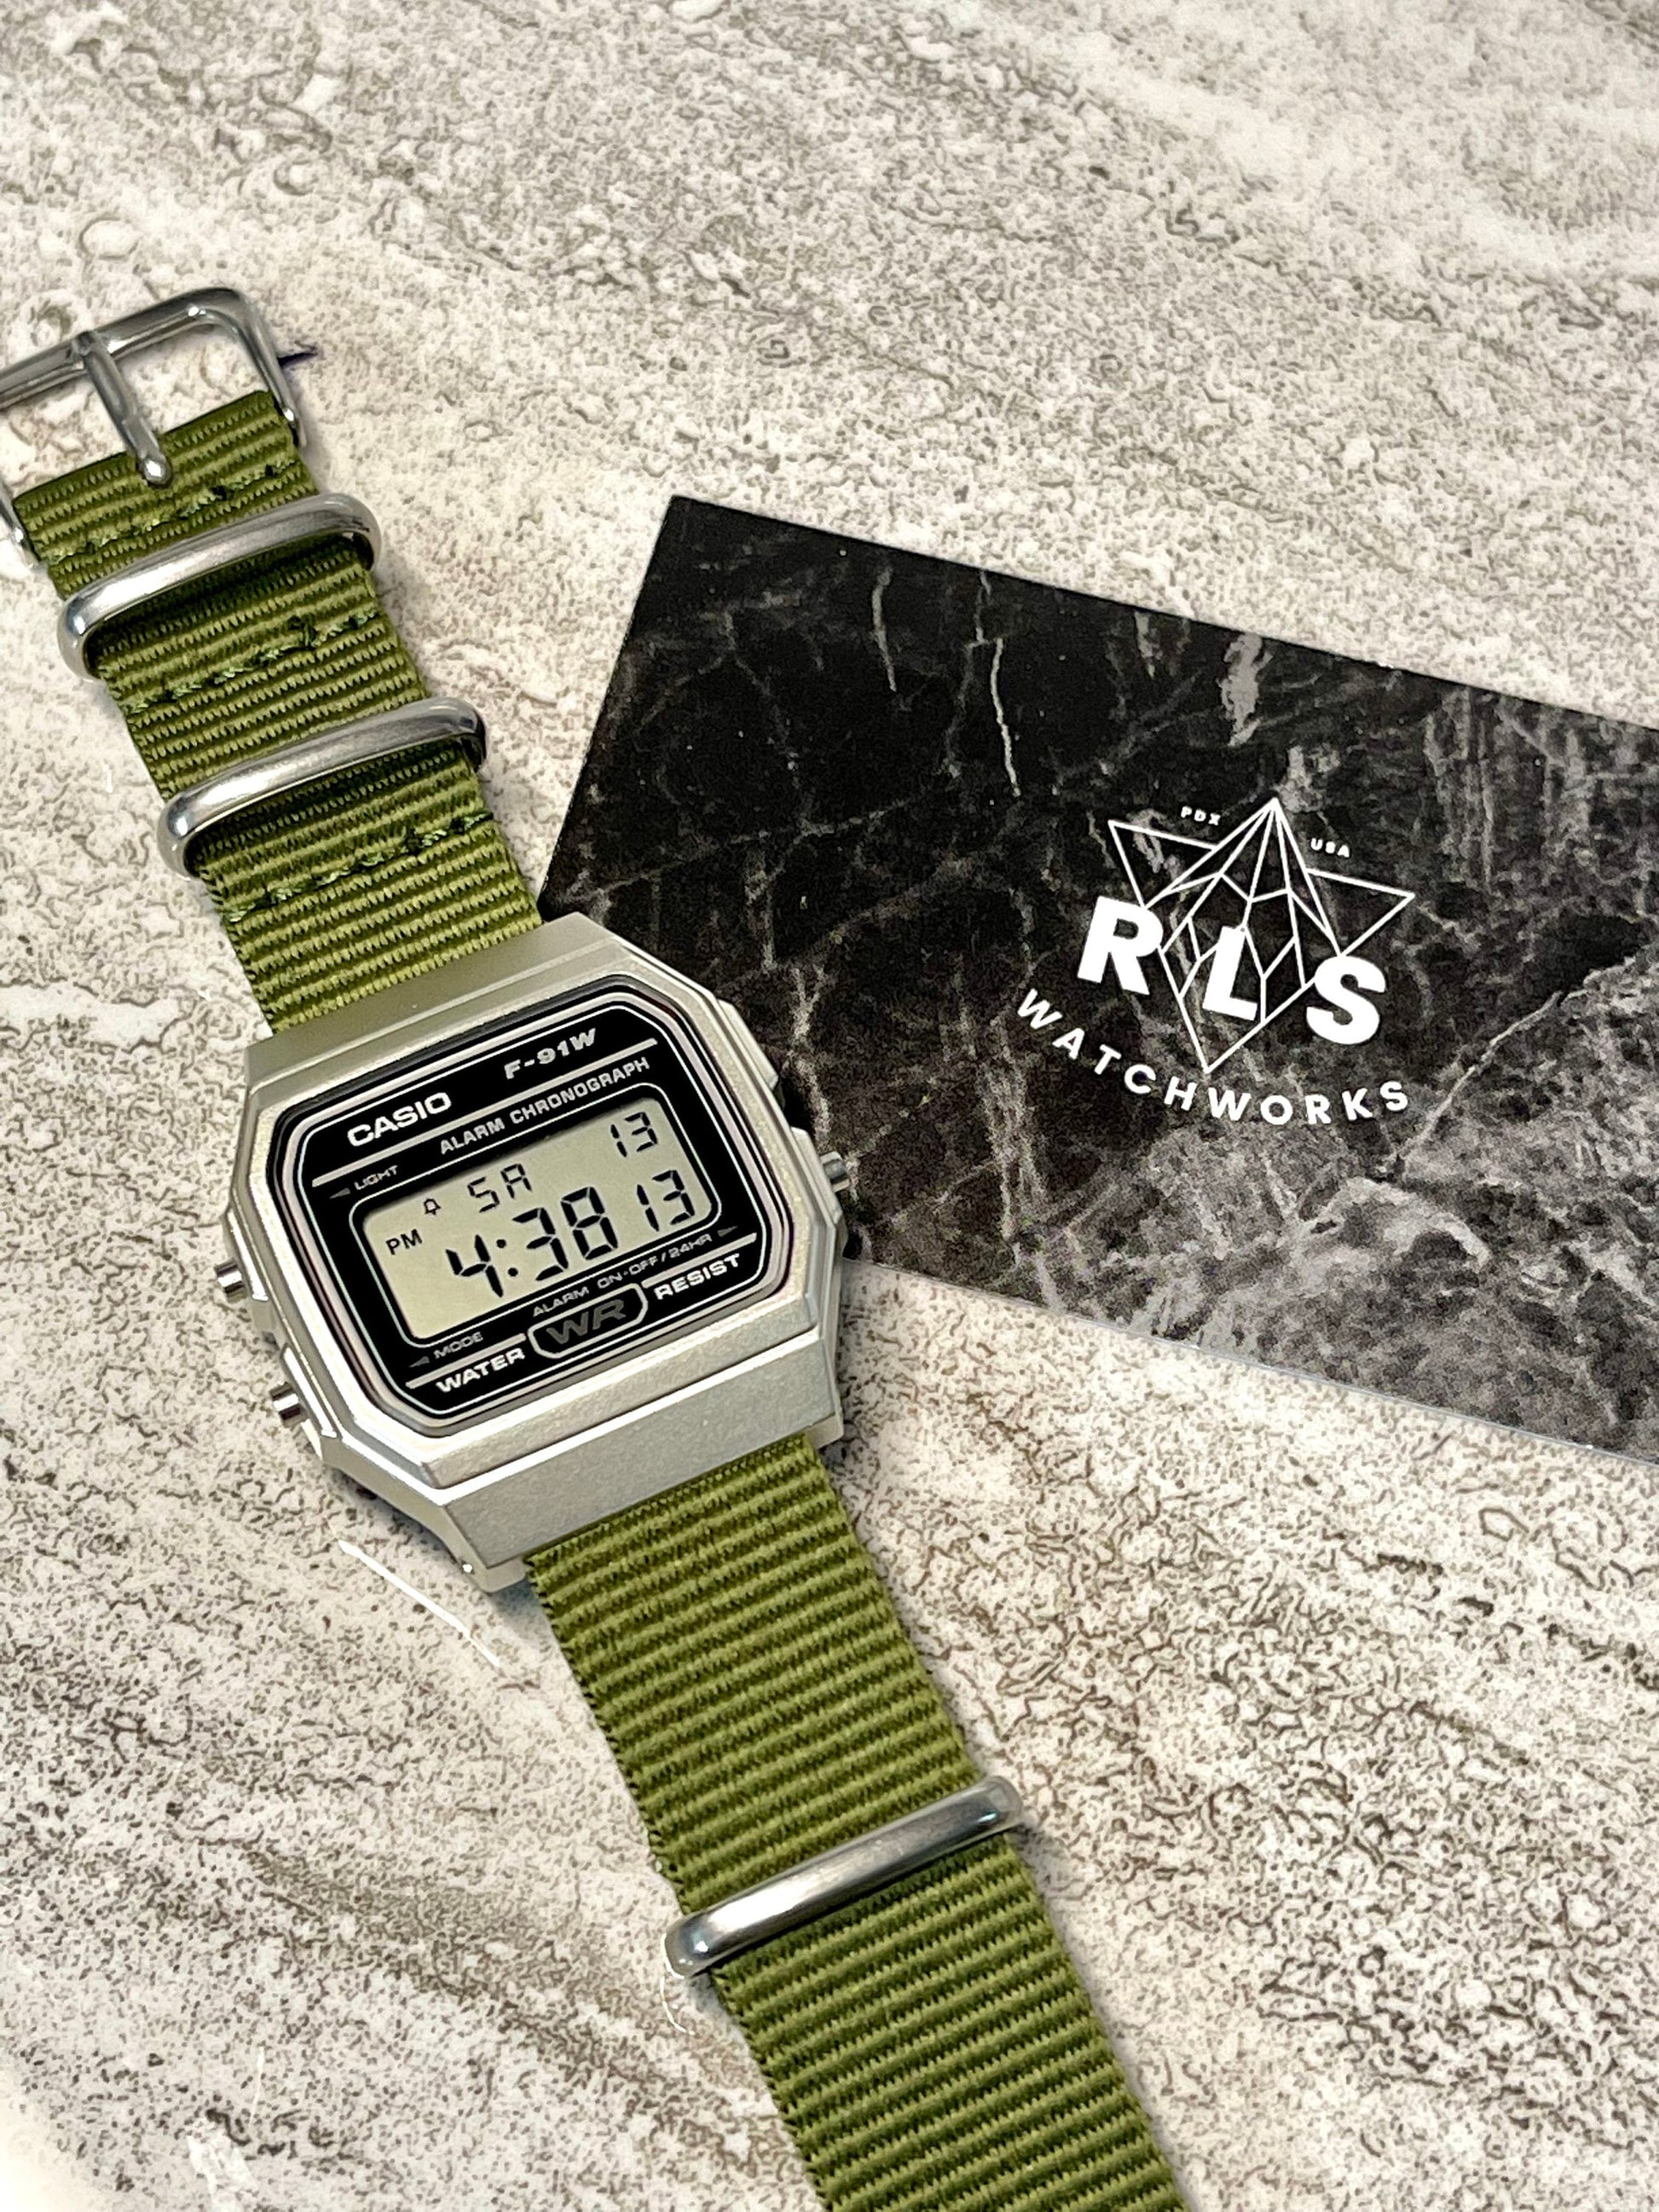 Custom Silver and black Casio Watch on Green Strap 